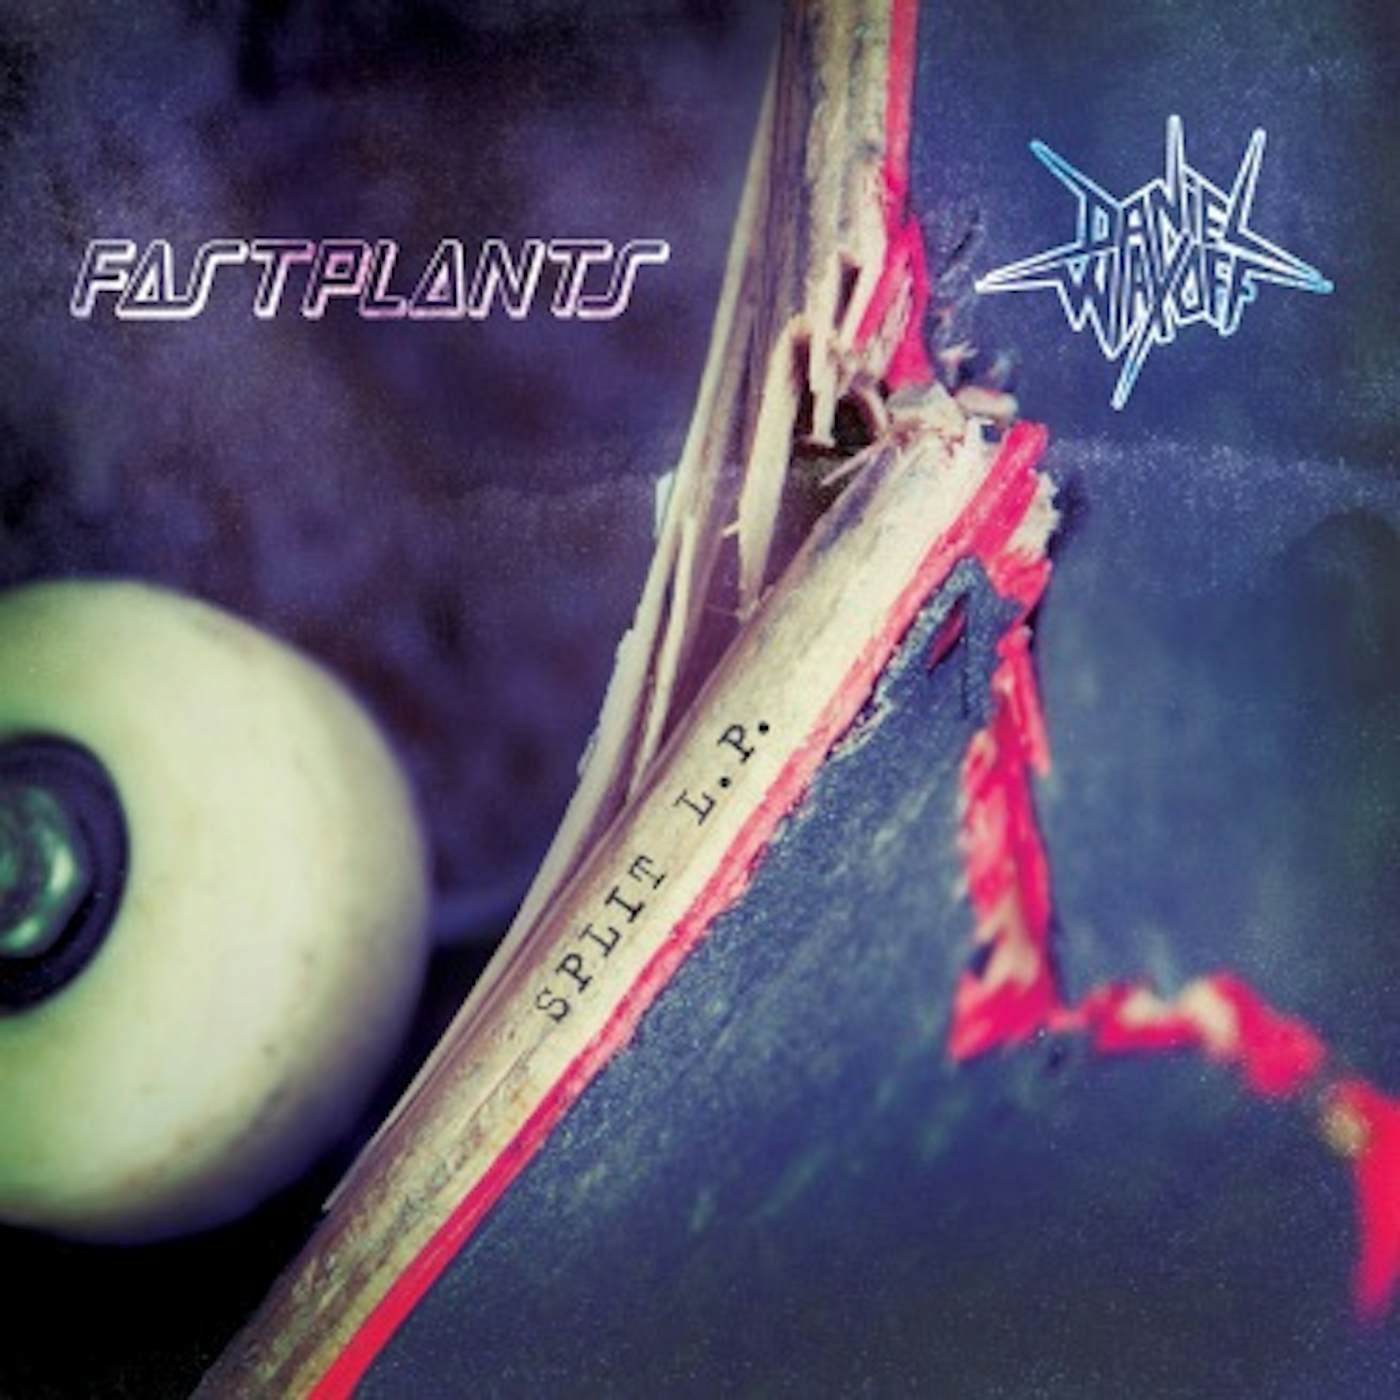 Fastplants SPLIT Vinyl Record